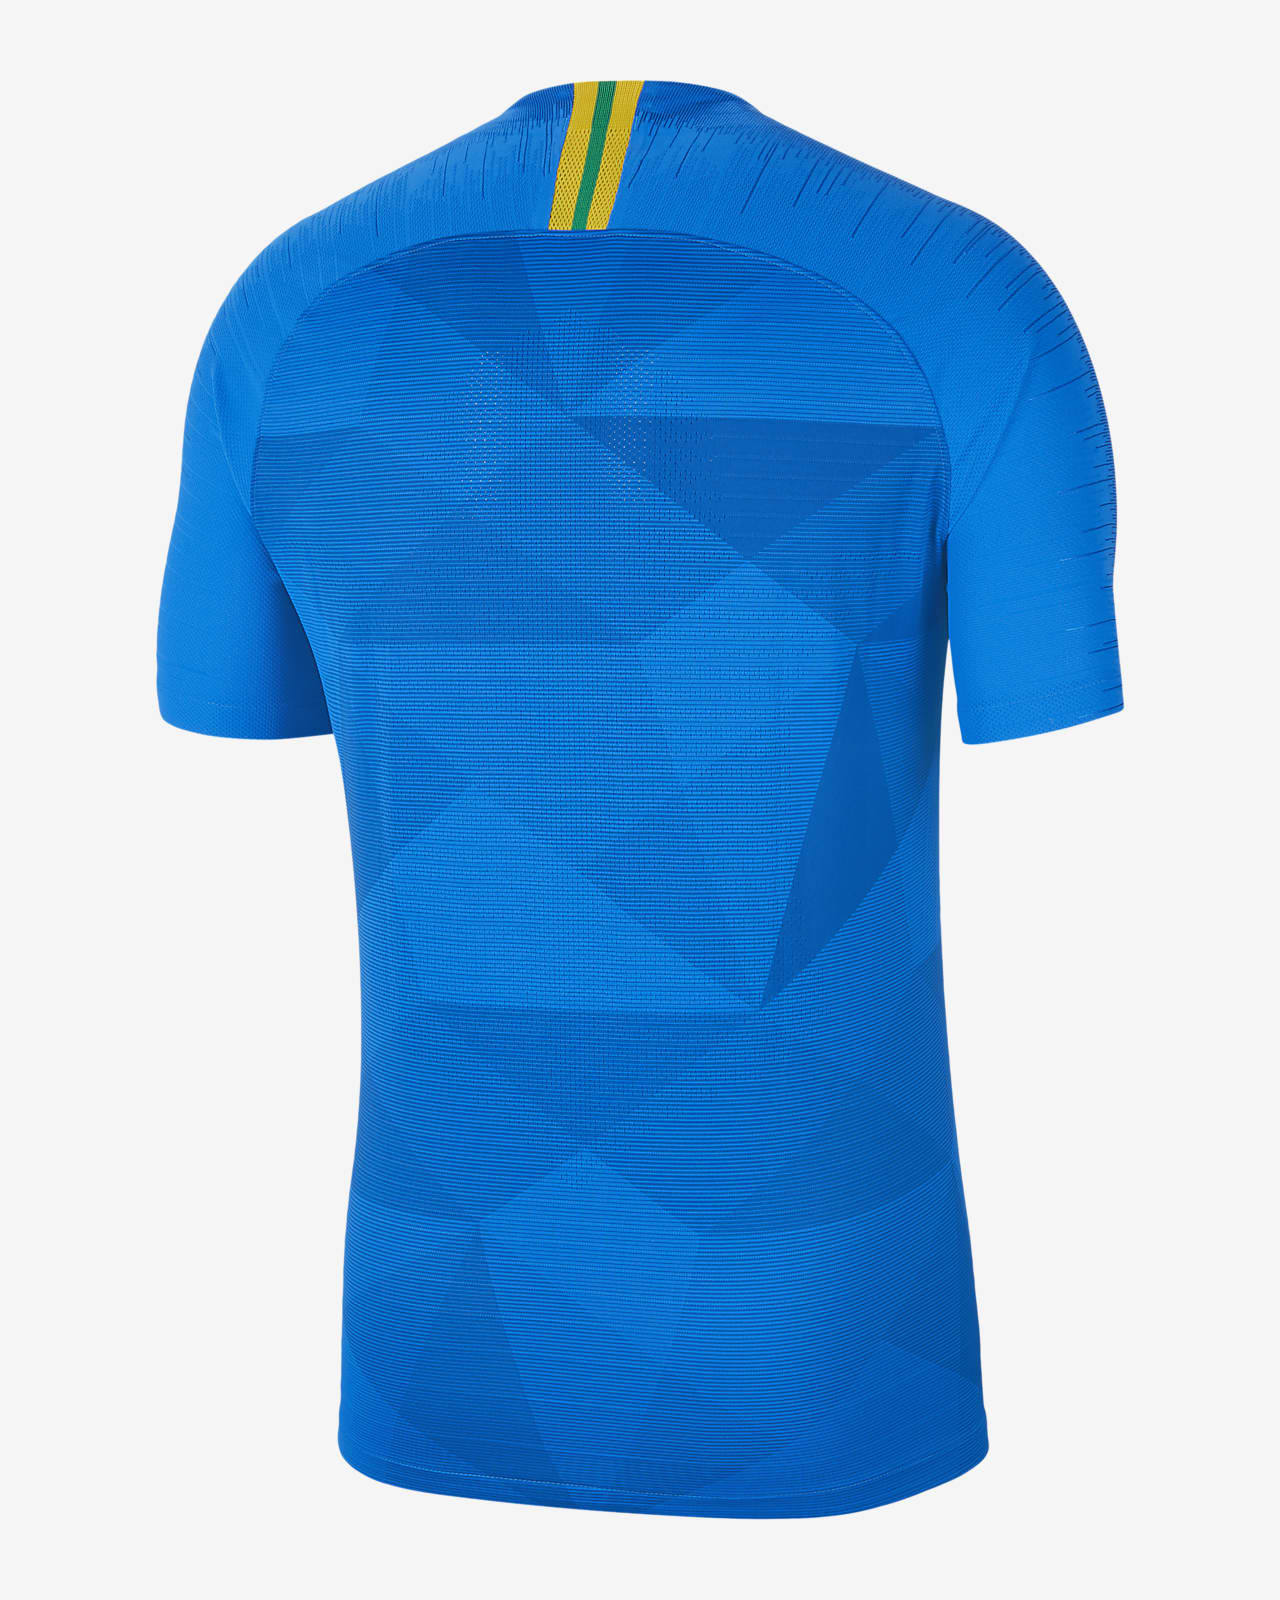 Nike Football Brazil squad t-shirt in blue 893353-454